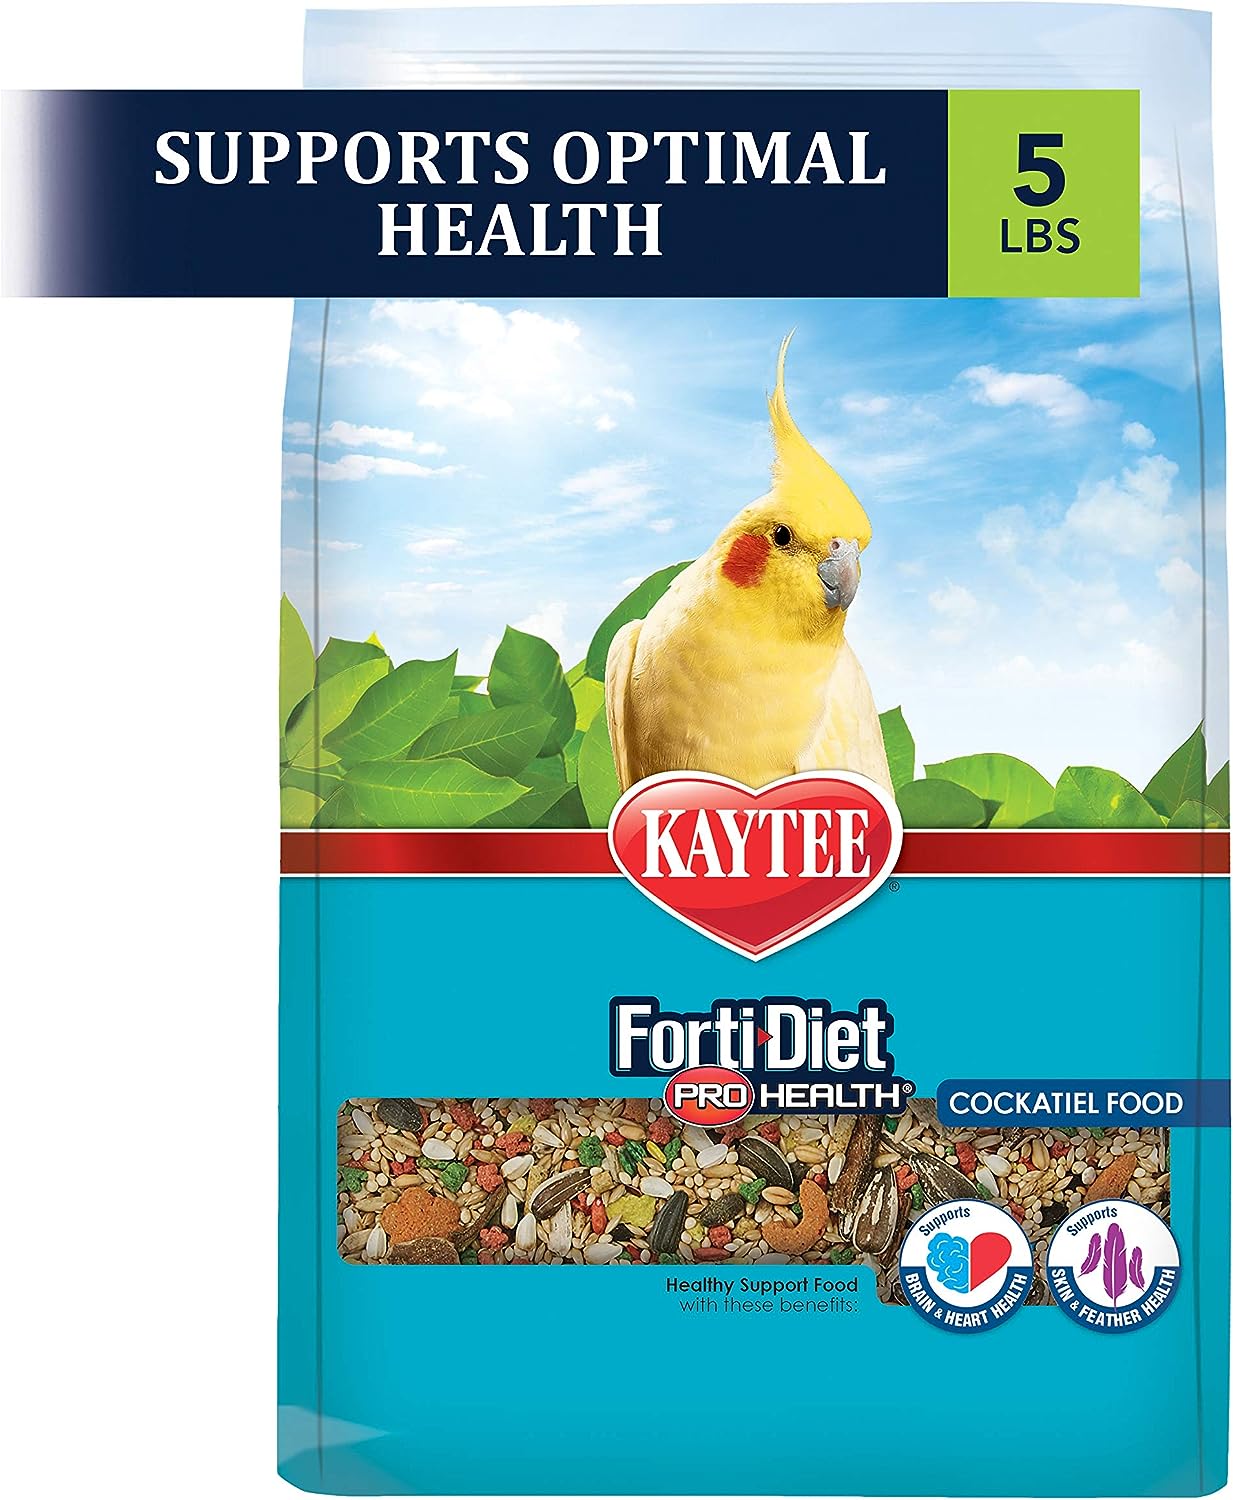 Forti-Diet Pro Health Cockatiel Food, 5-lb